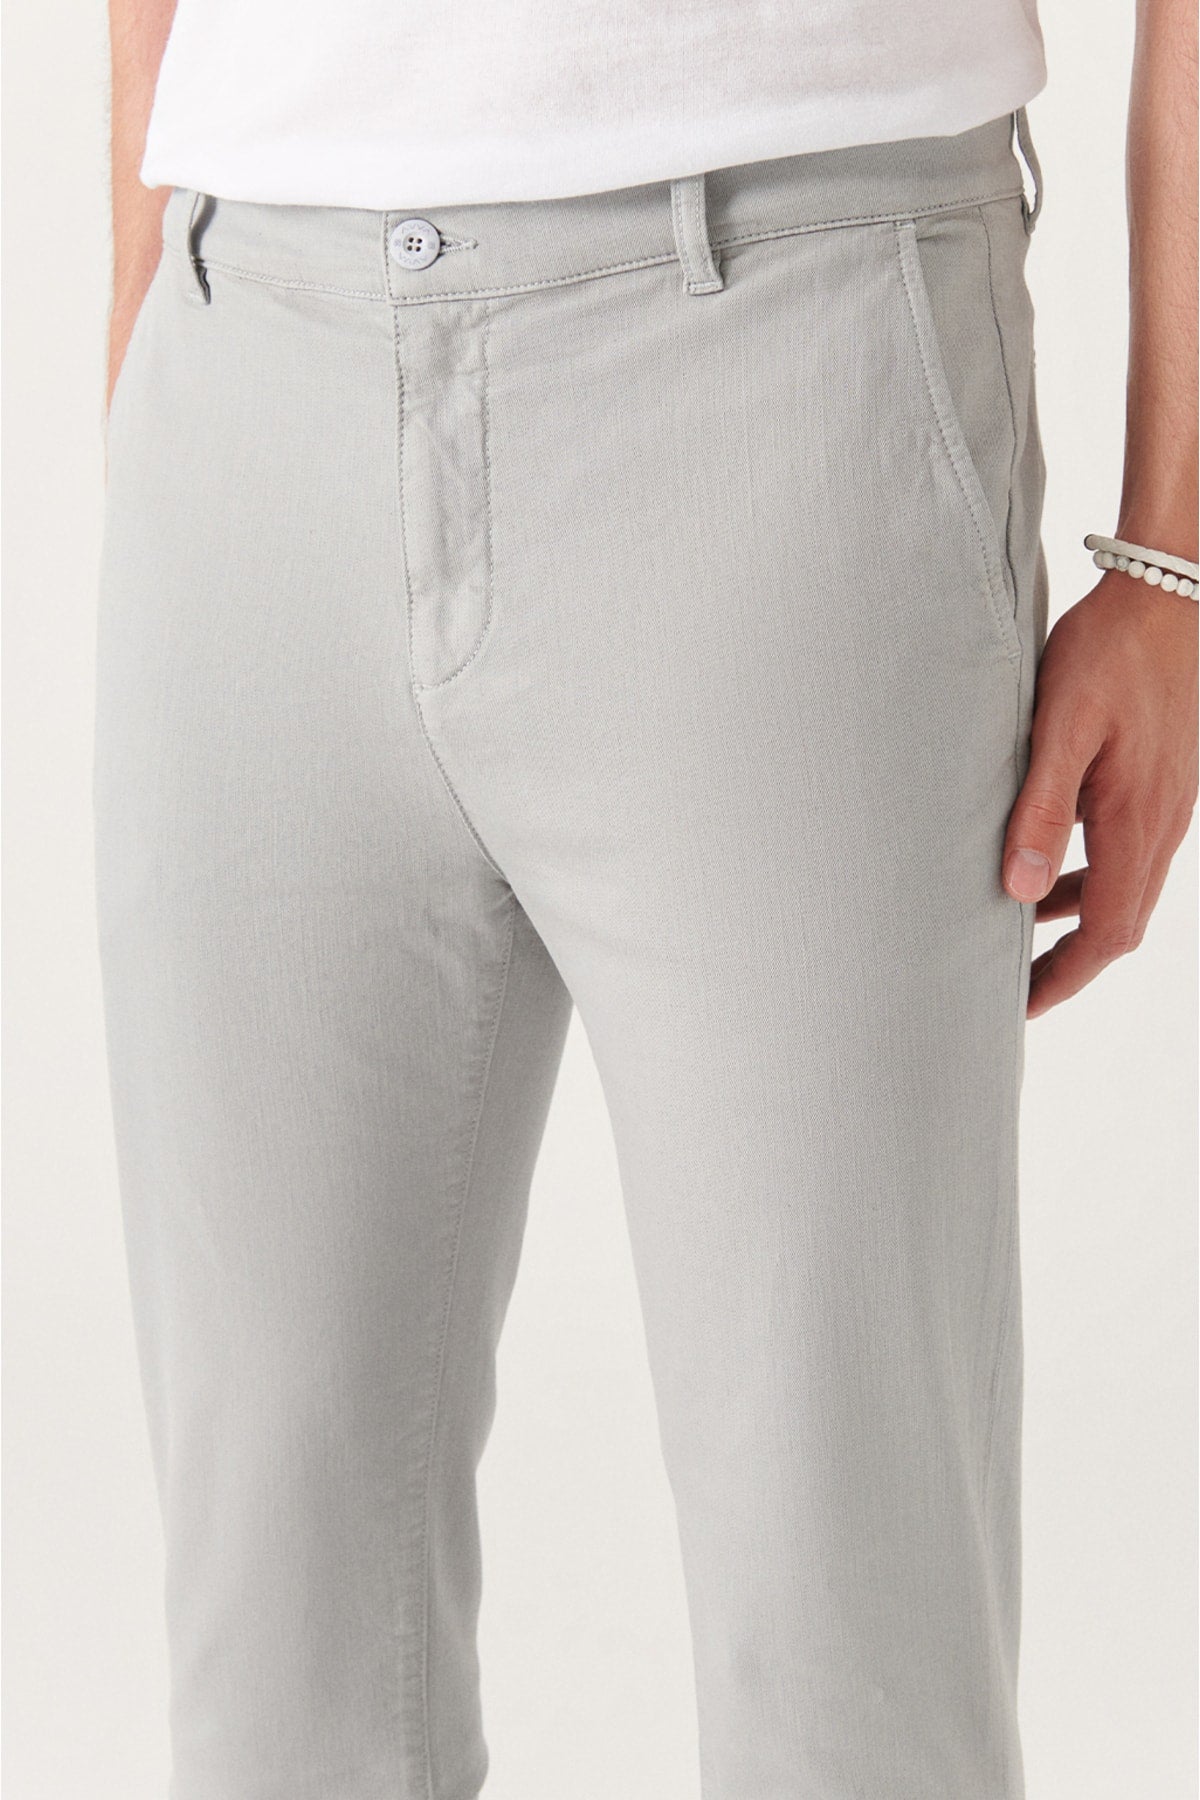 Men's Gray Flexible Slim Fit Pants A21y3037